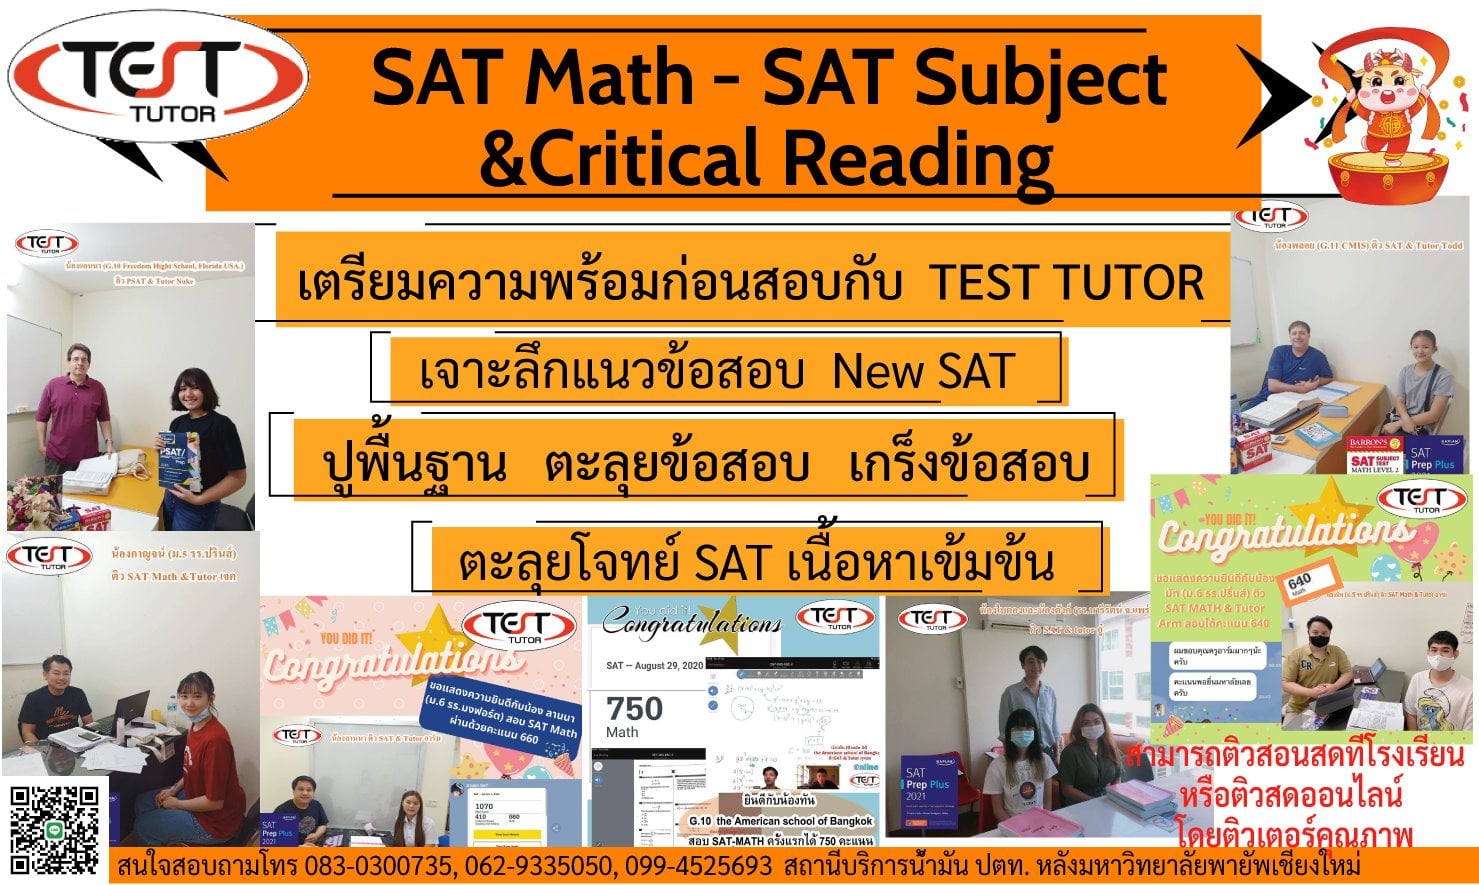 sat-scholastic-aptitude-tests-scholastic-assessment-tests-test-tutor-chiangmai